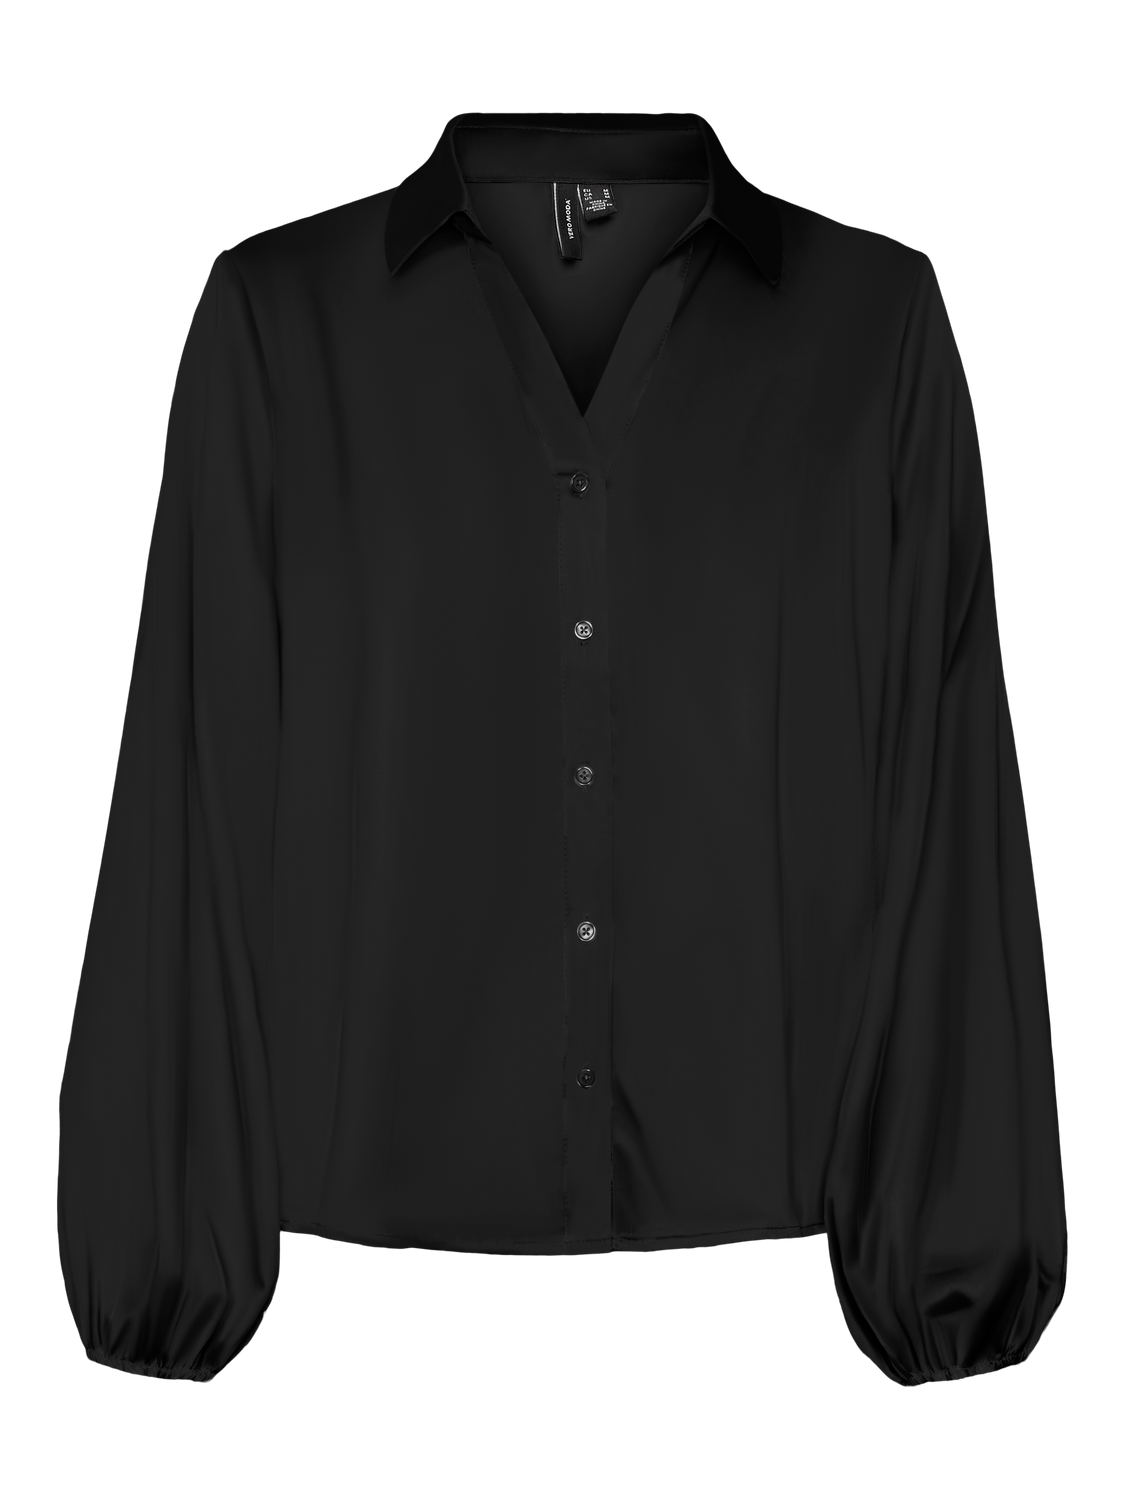 VMMERLE T-Shirts & Tops - Black